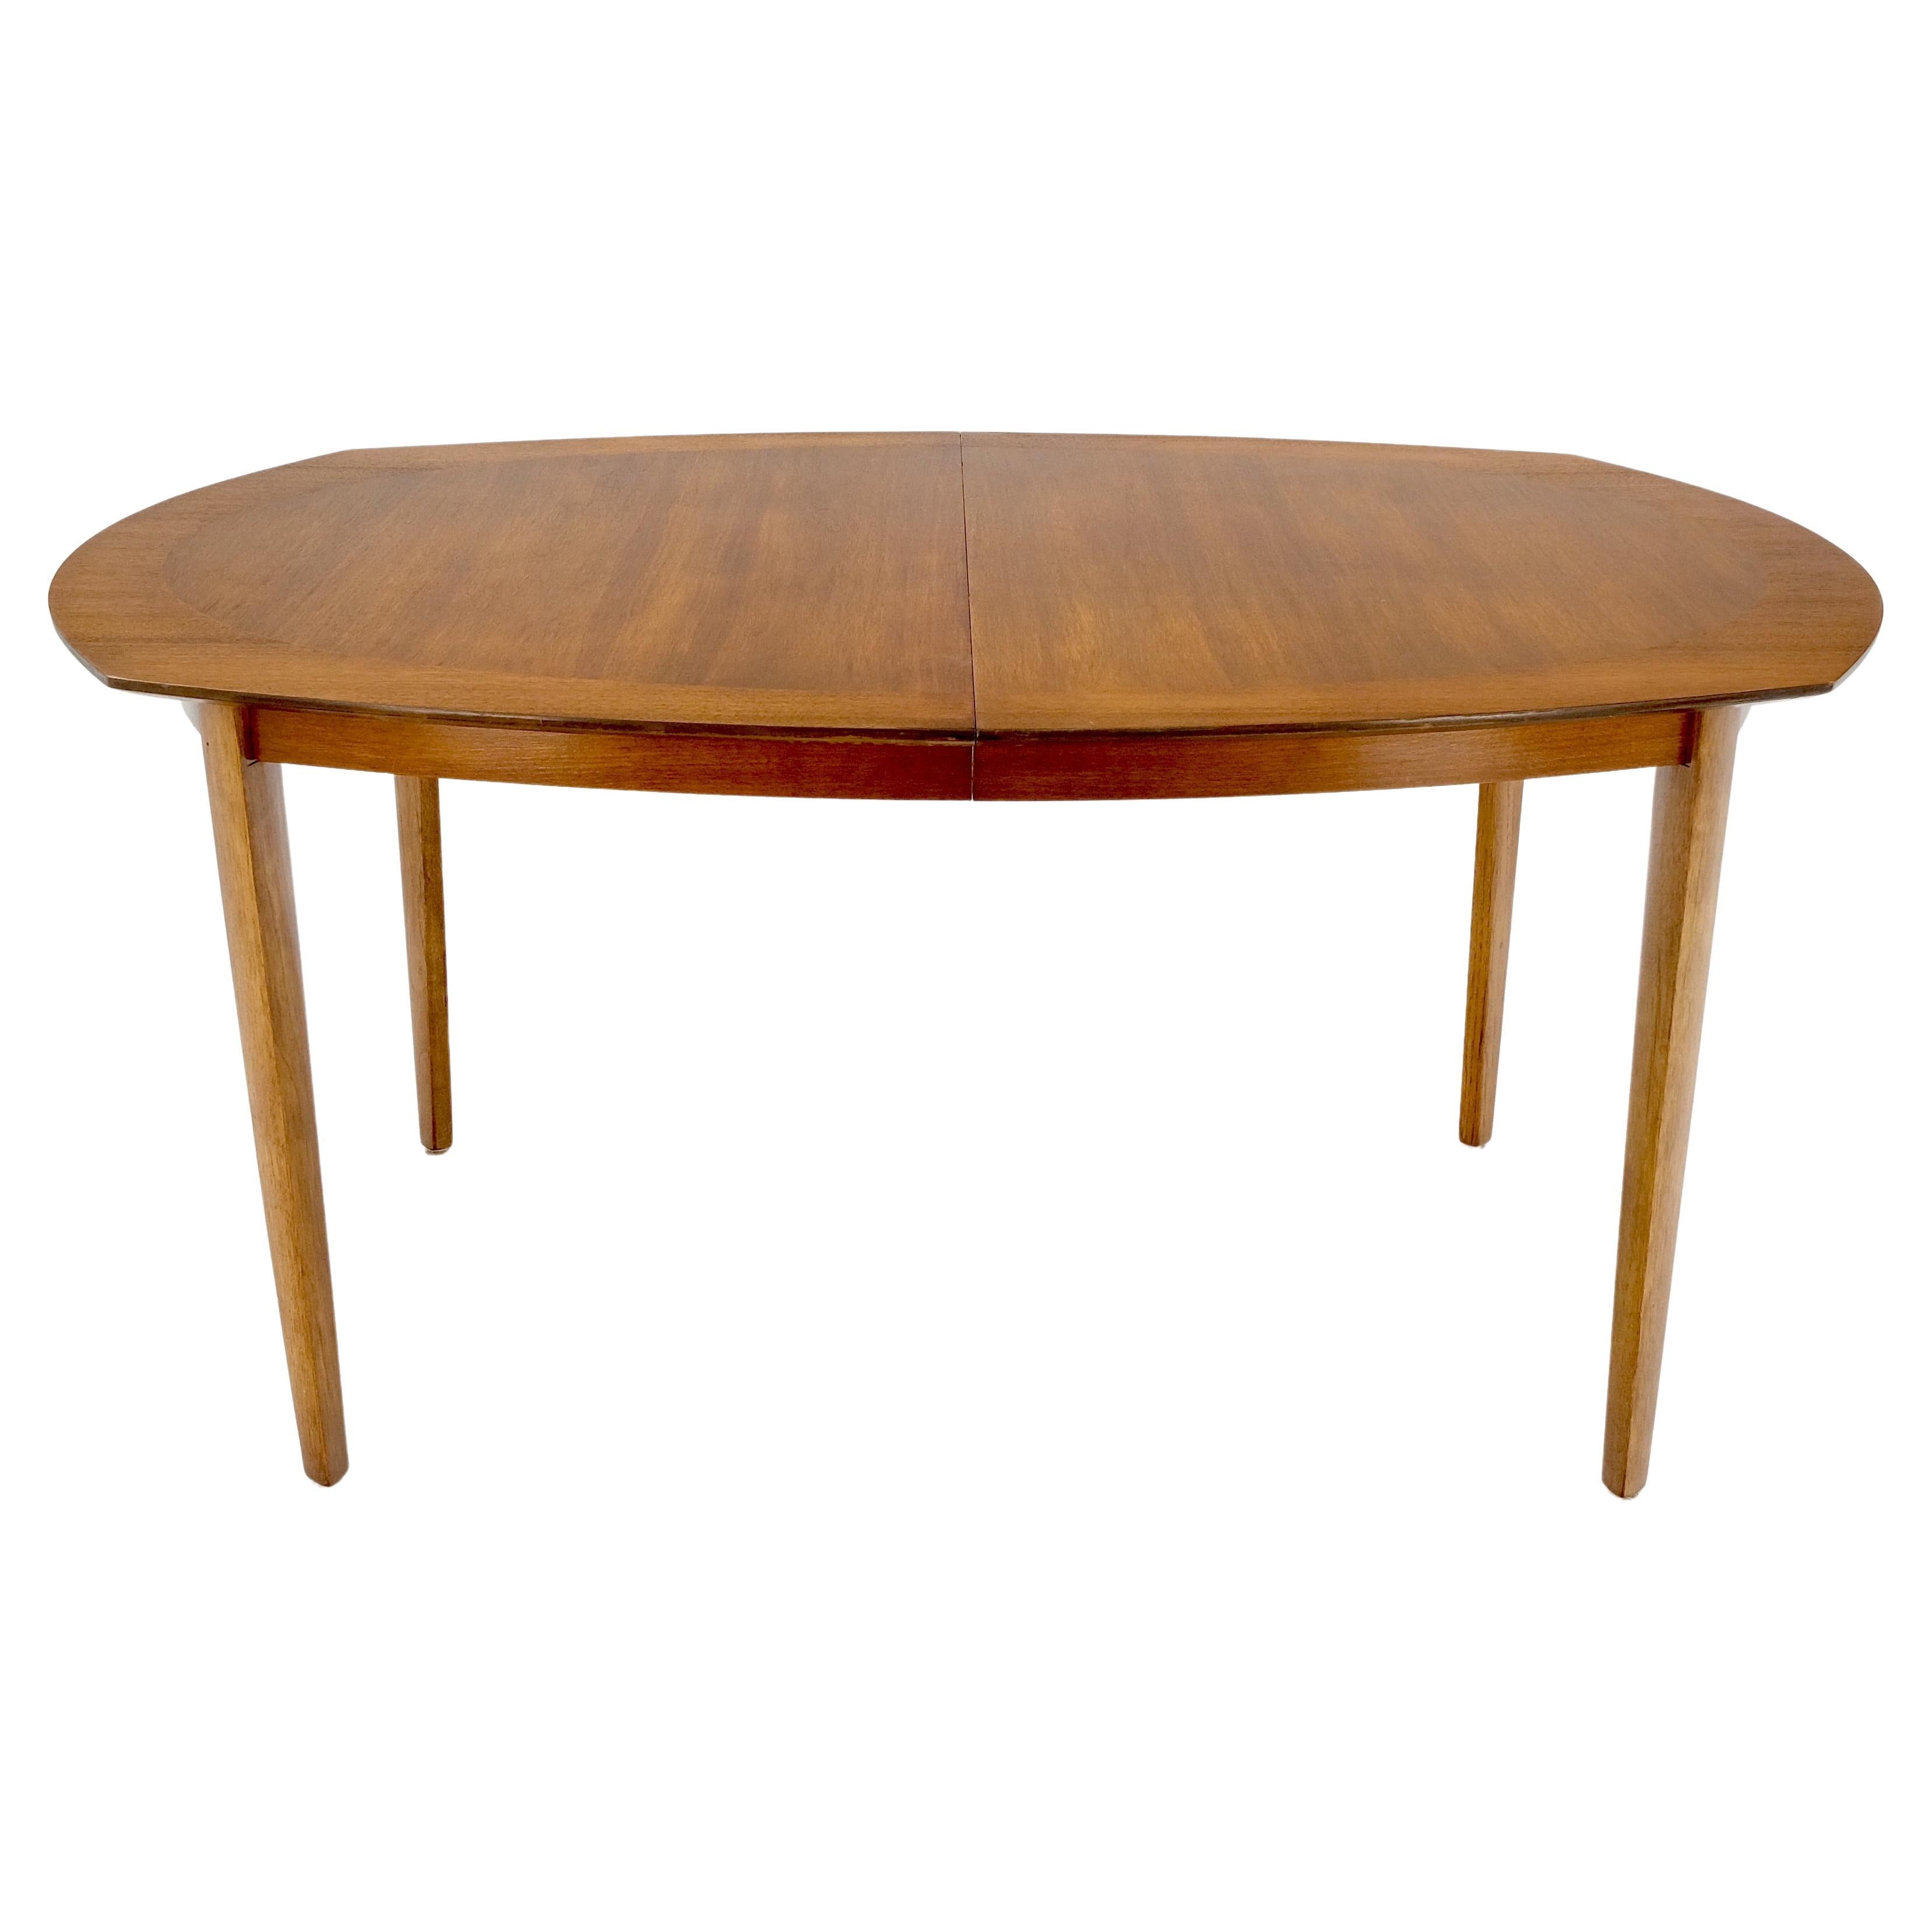 Mid-Century Modern light walnut boat oval shape banded dining table 2x18